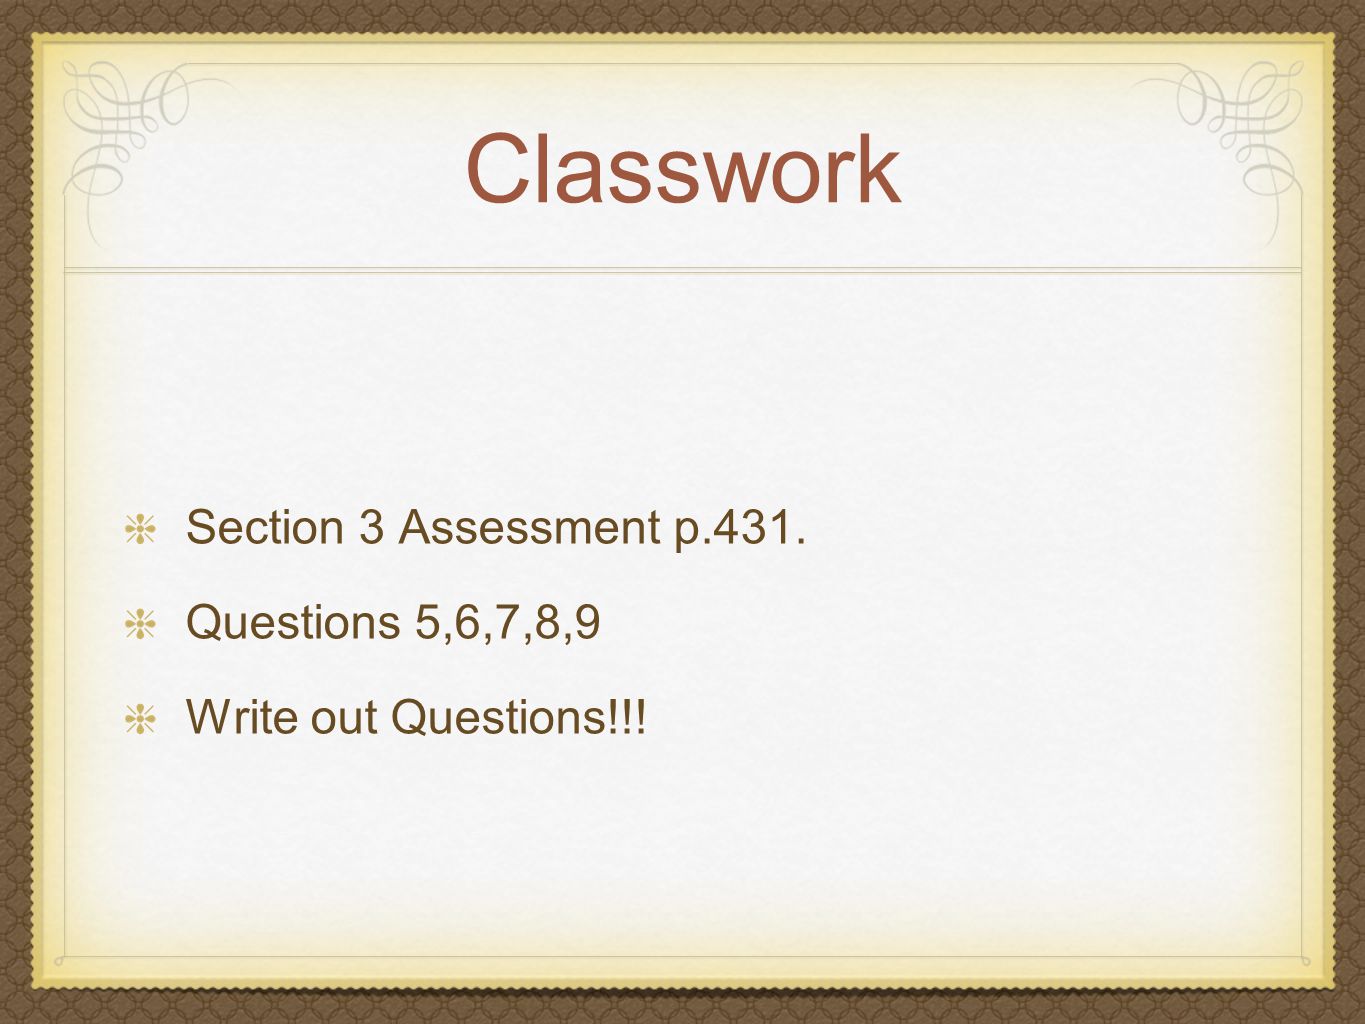 Classwork Section 3 Assessment p.431. Questions 5,6,7,8,9